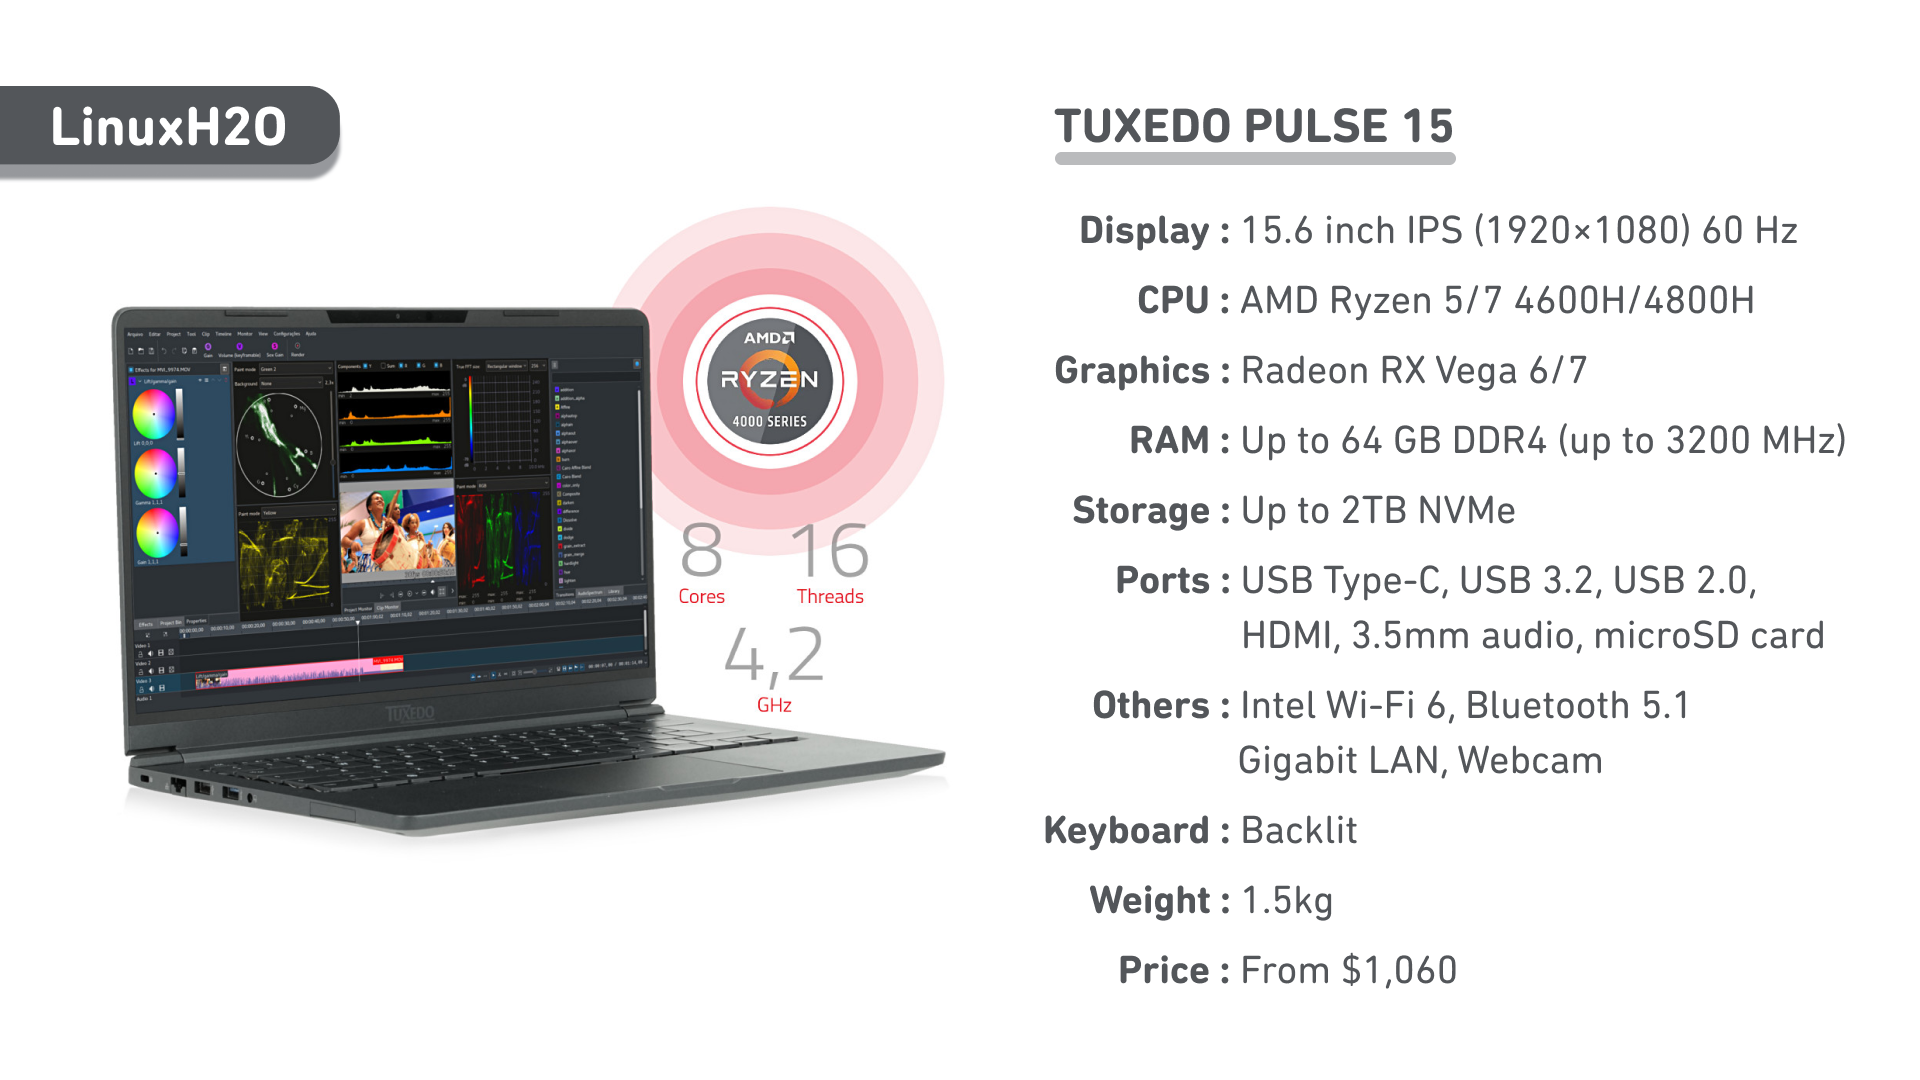 Tusedo Pulse 15 Linux based laptop